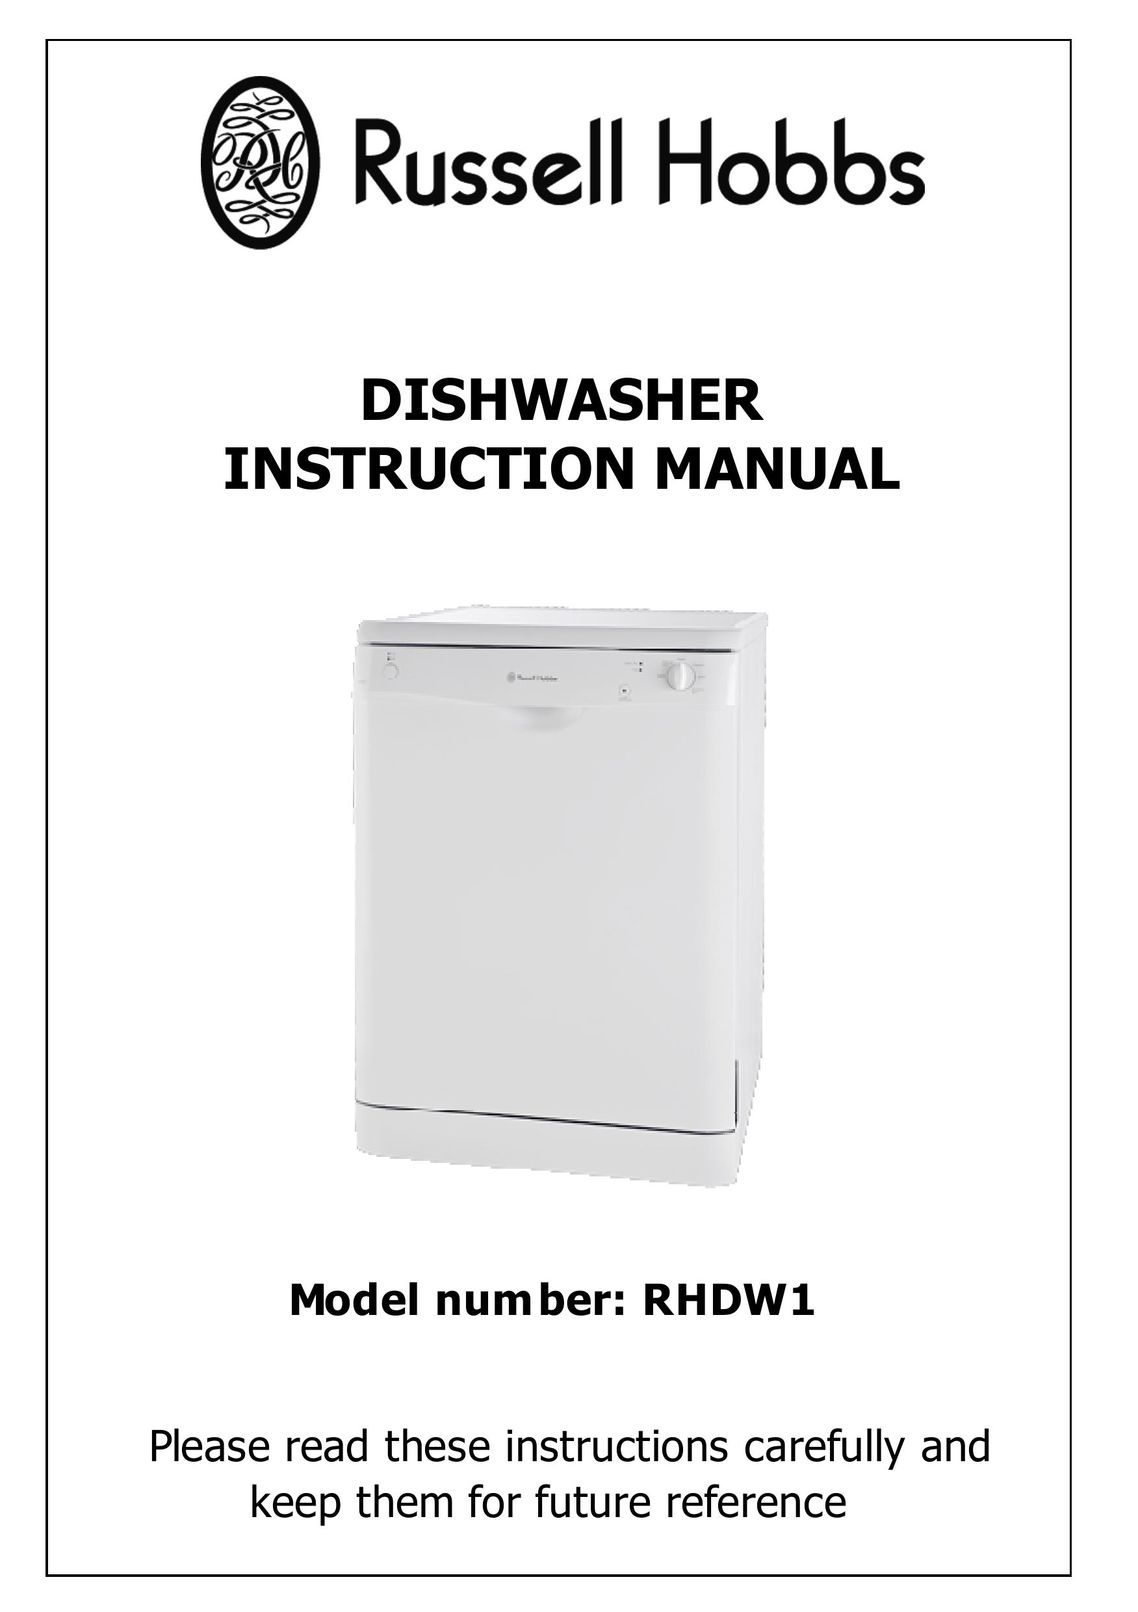 Russell Hobbs RHDW1 Dishwasher User Manual